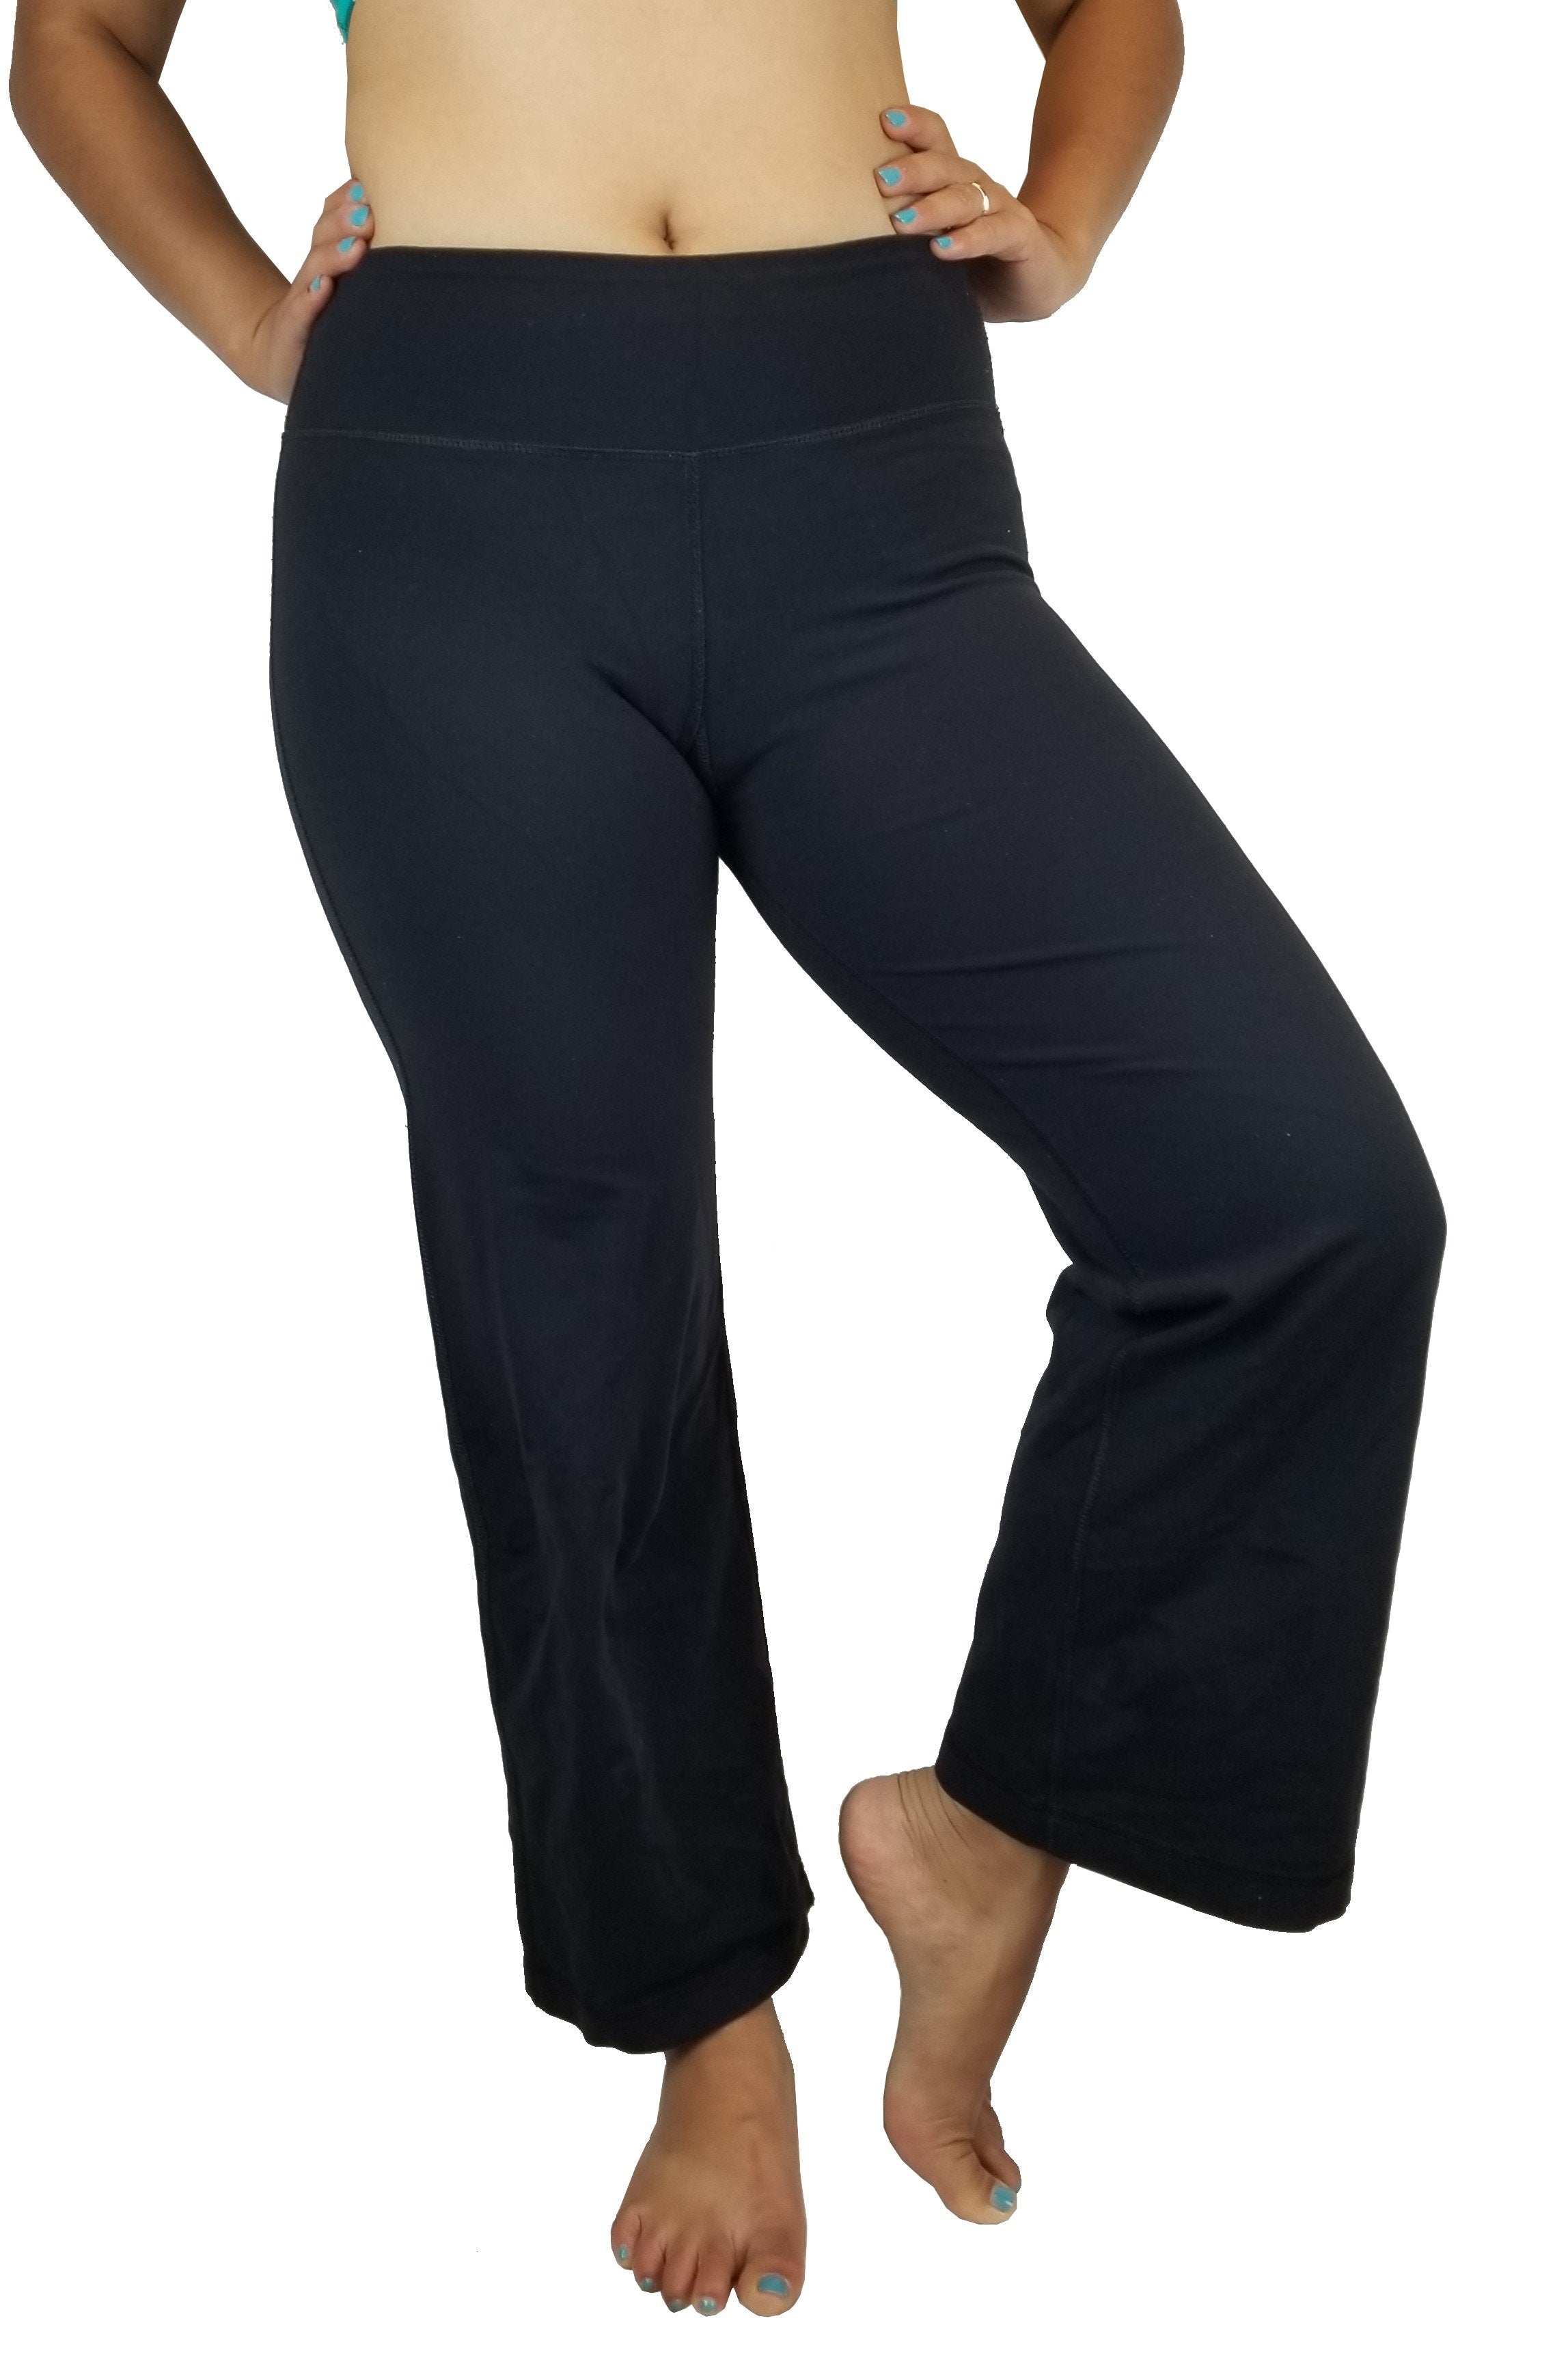 Lululemon Women's Size 6 Black Fold Over Waist Wide Leg Yoga Pants